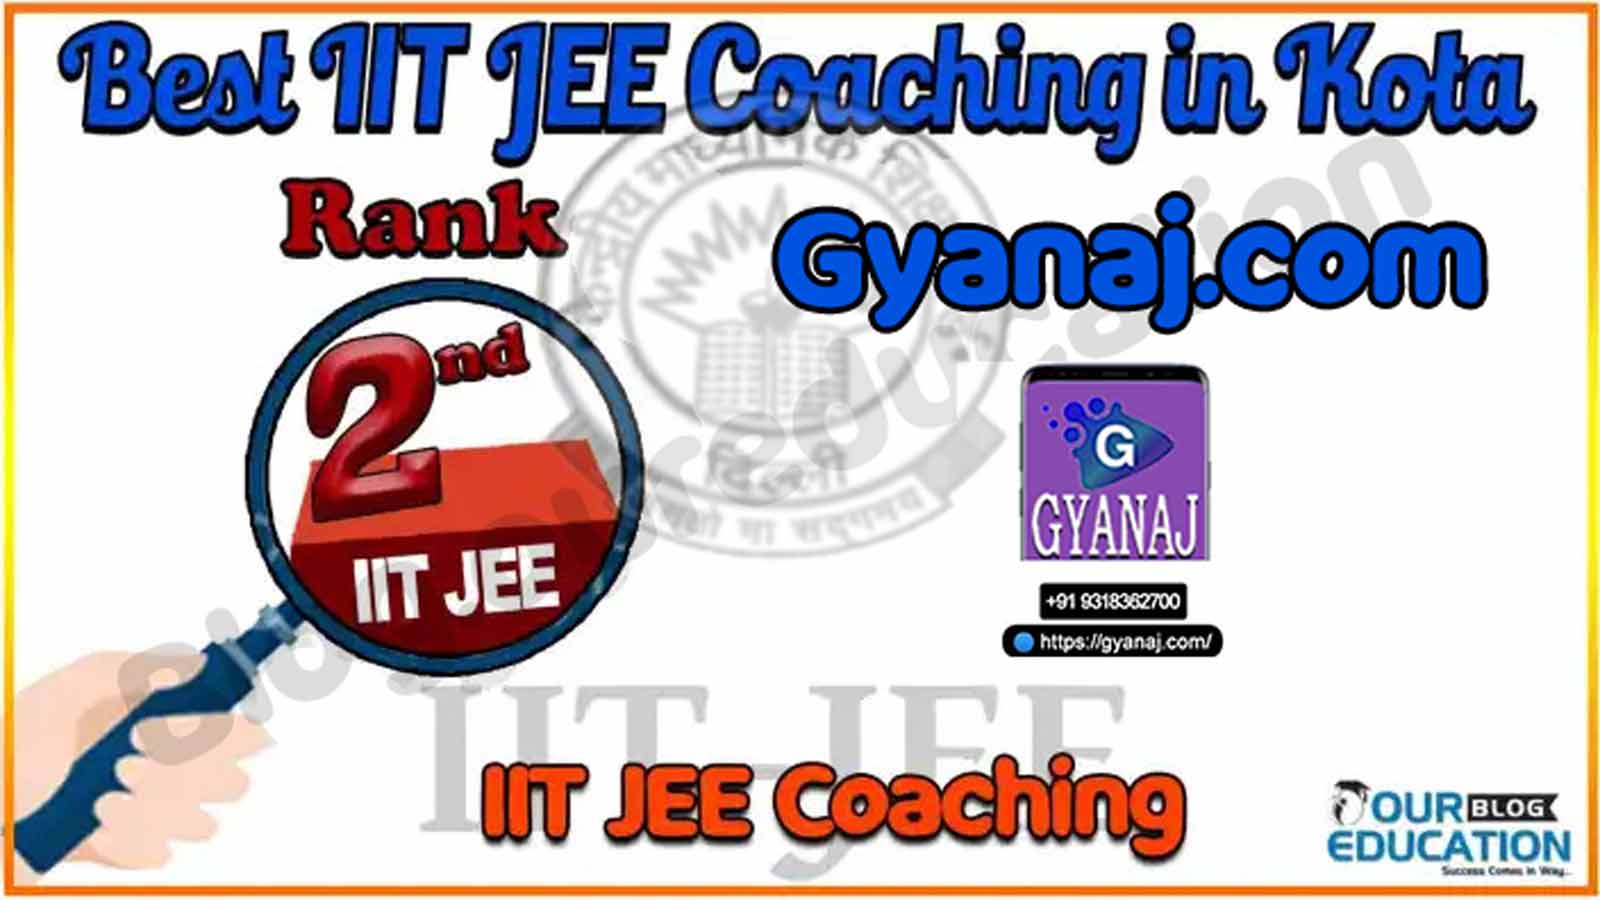 Rank 2 Best IIT JEE Coaching in Kota 2022